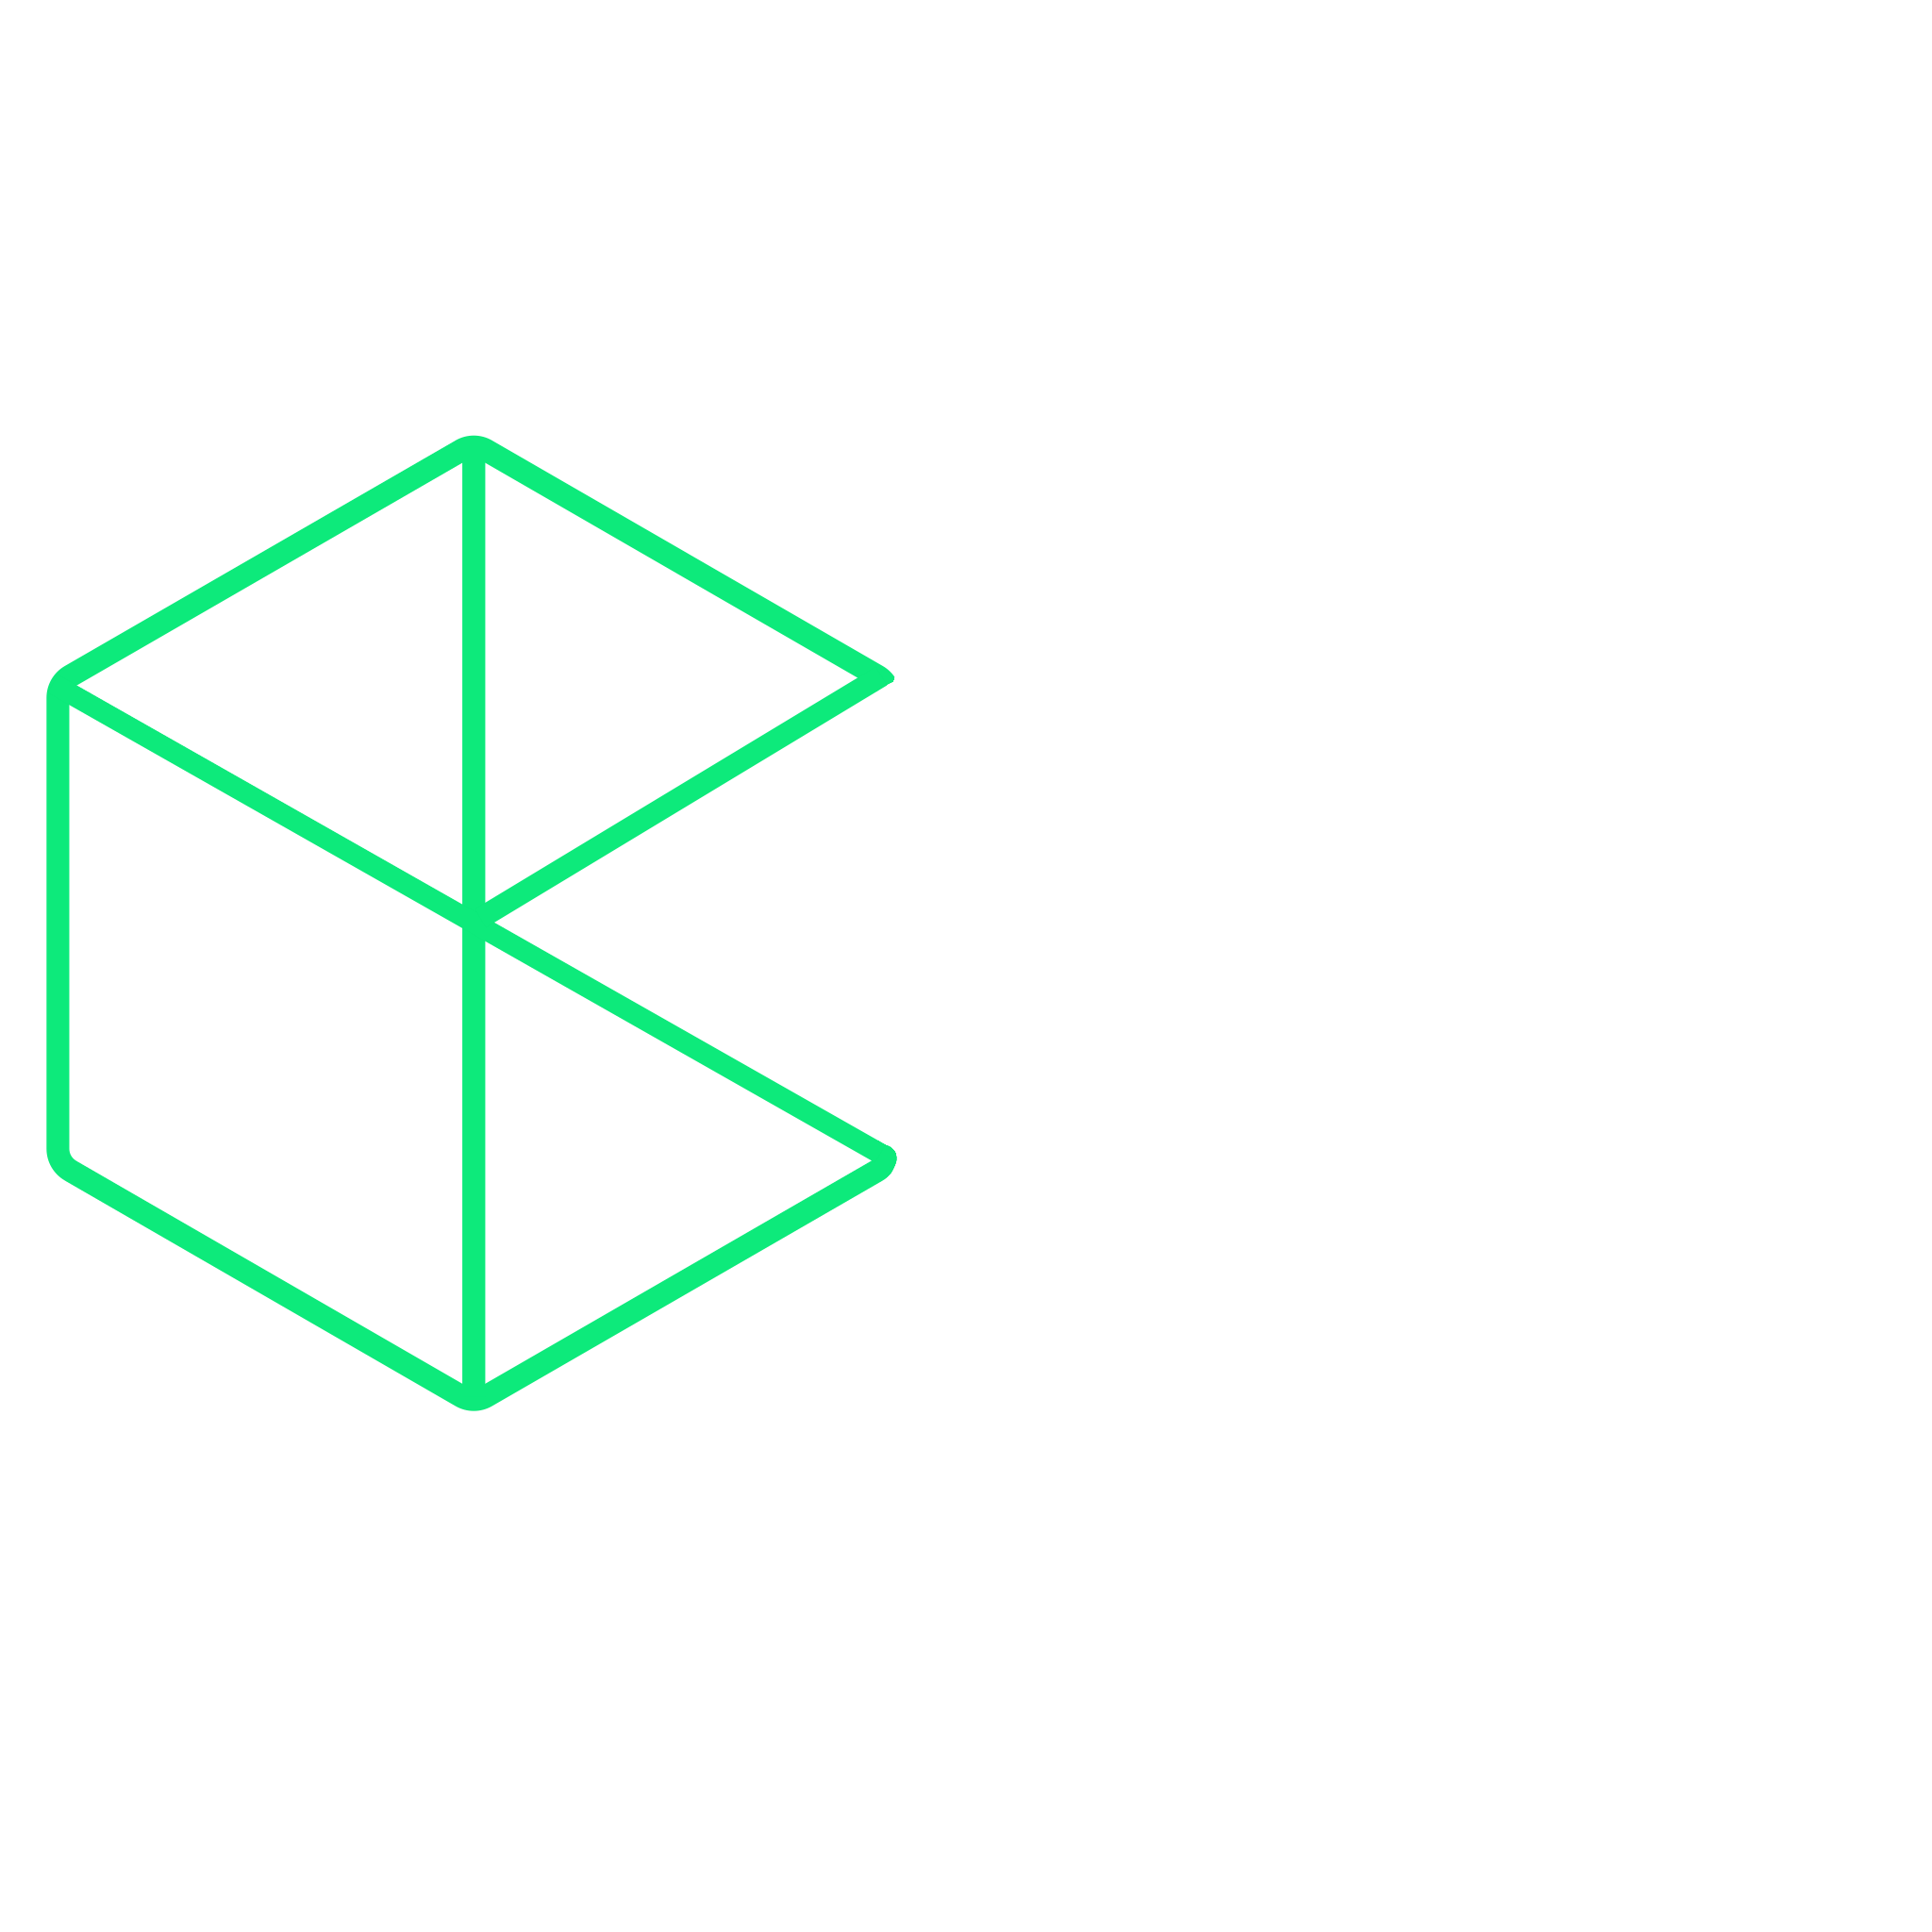 Central Kentucky Inspections